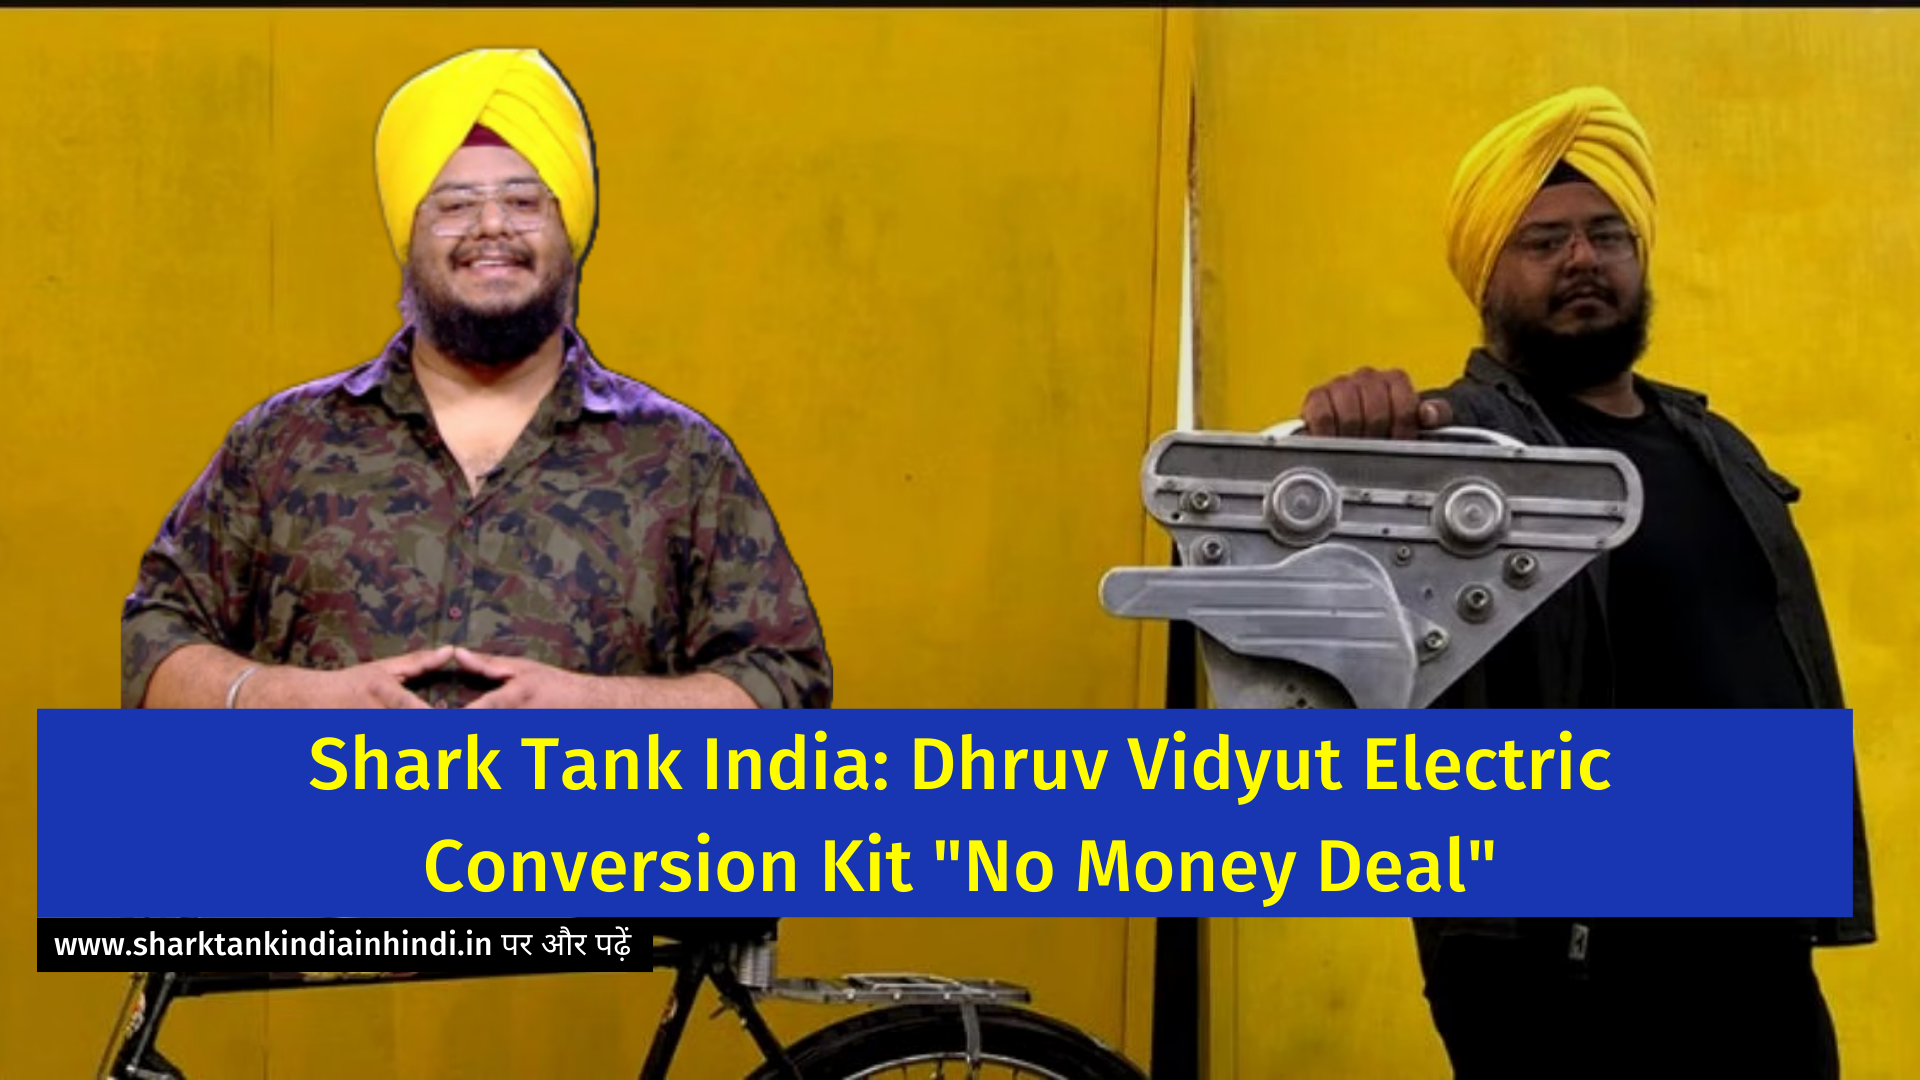 Shark Tank India: Dhruv Vidyut Electric Conversion Kit "No Money Deal"